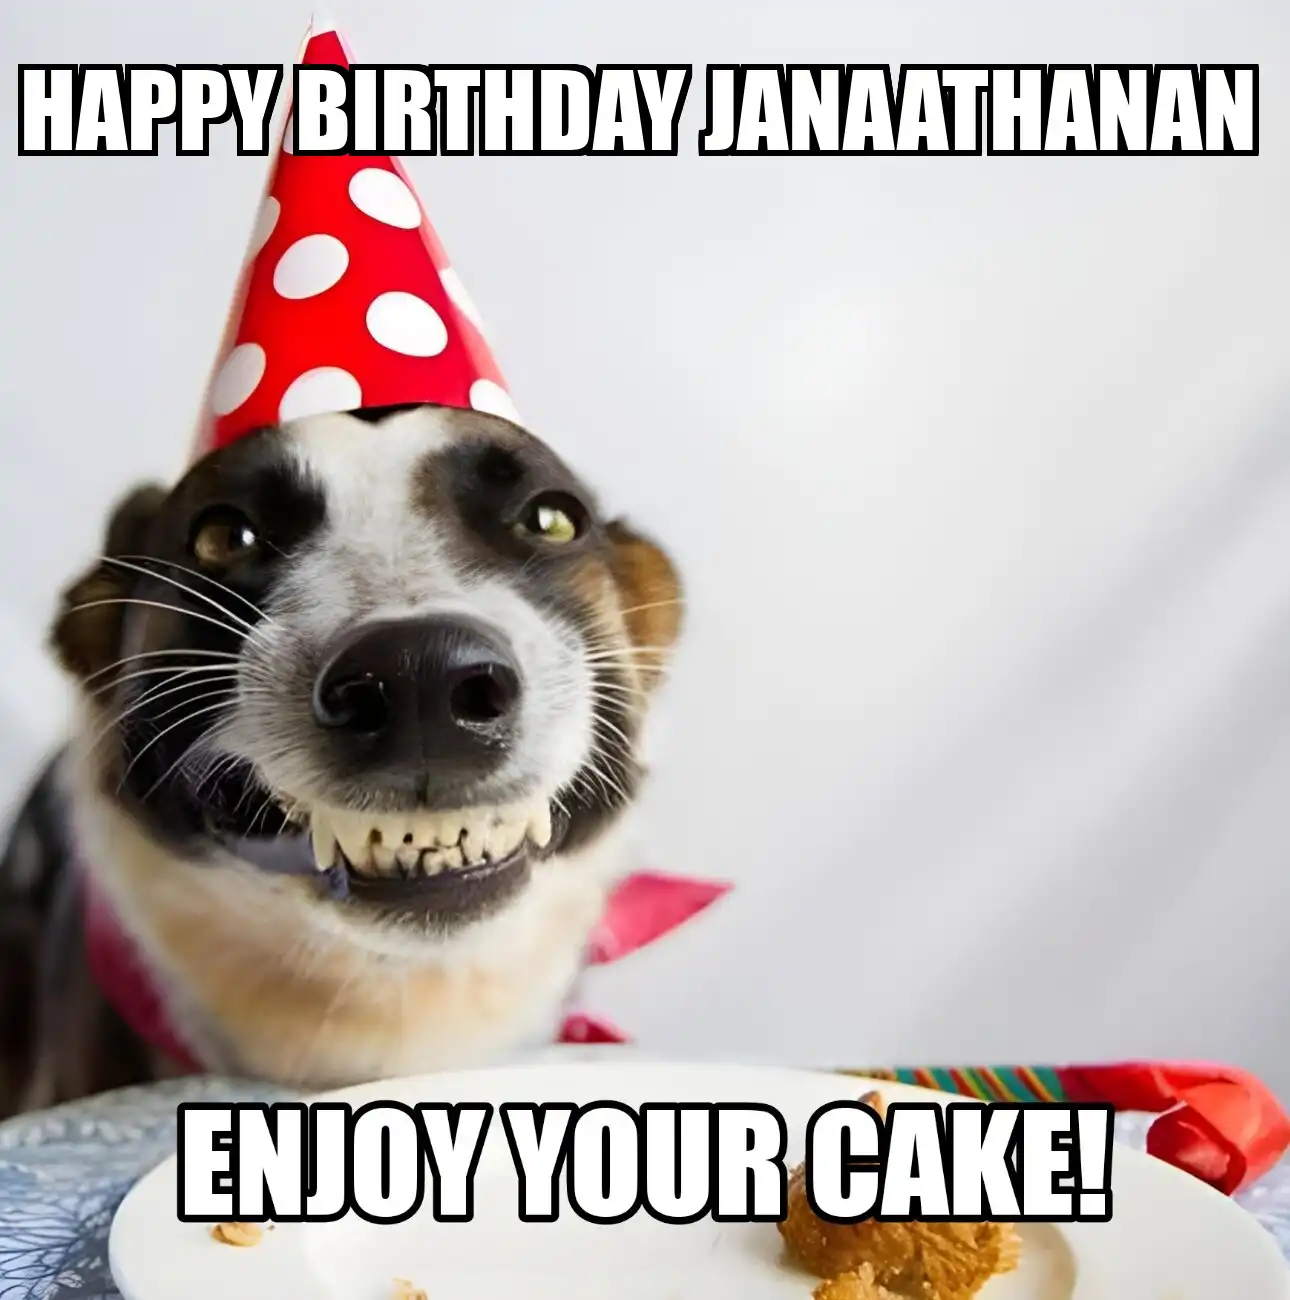 Happy Birthday Janaathanan Enjoy Your Cake Dog Meme